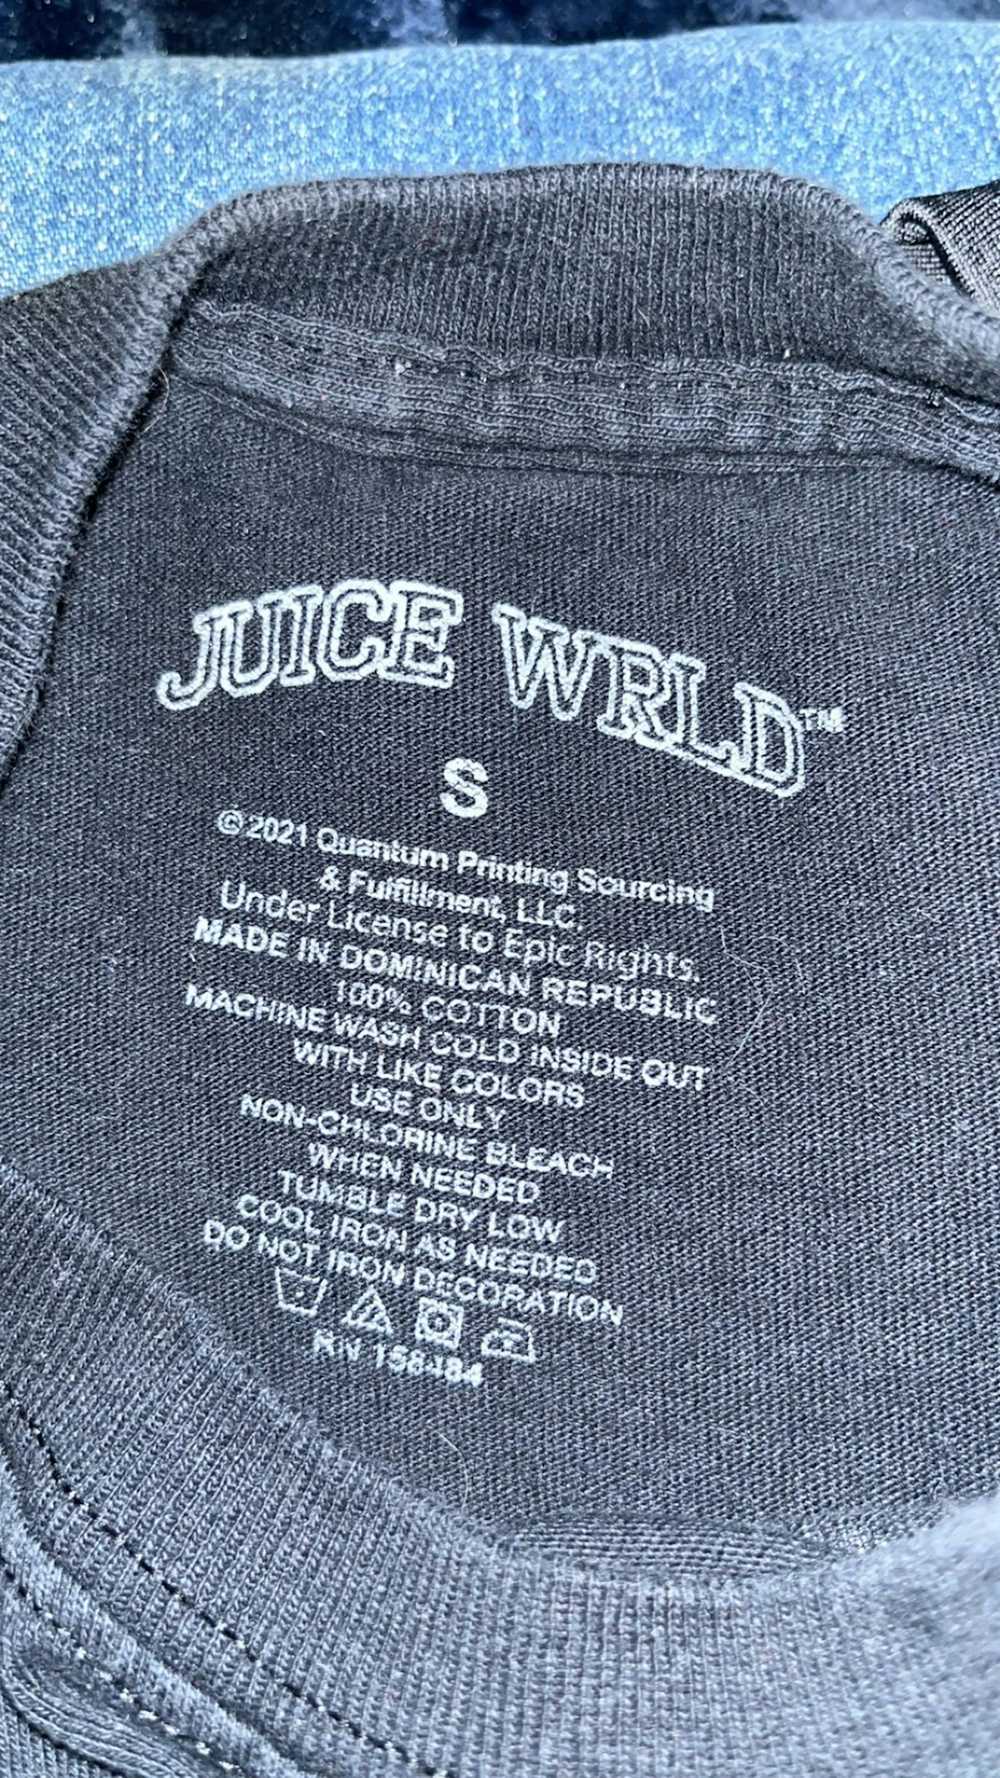 Vintage juice wrld 2021 exclusive shirt - image 2